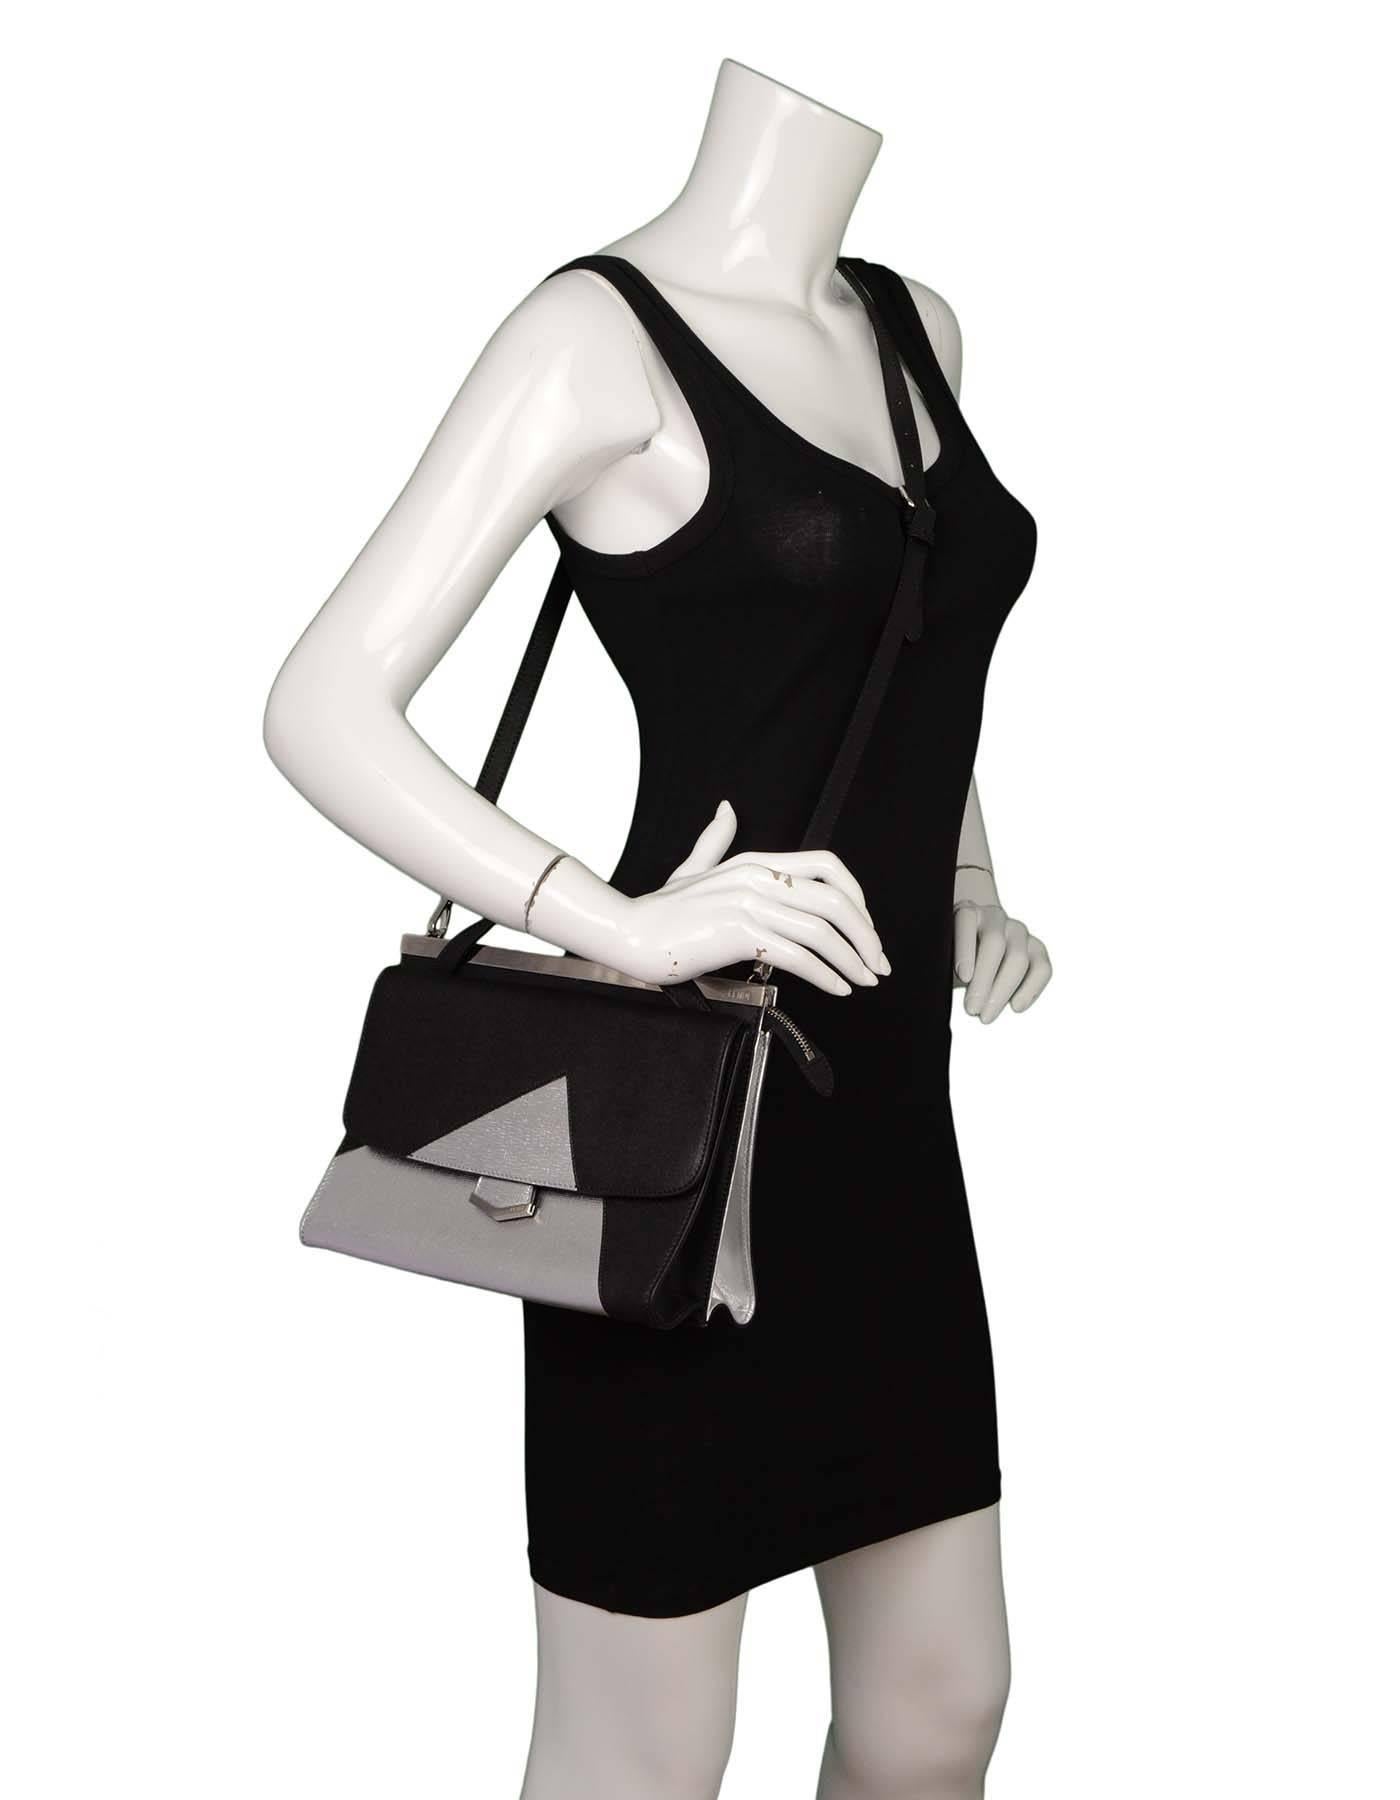 Fendi Black & Silver Textured Leather 'Demijours' Bag SHW rt. $2, 025 6